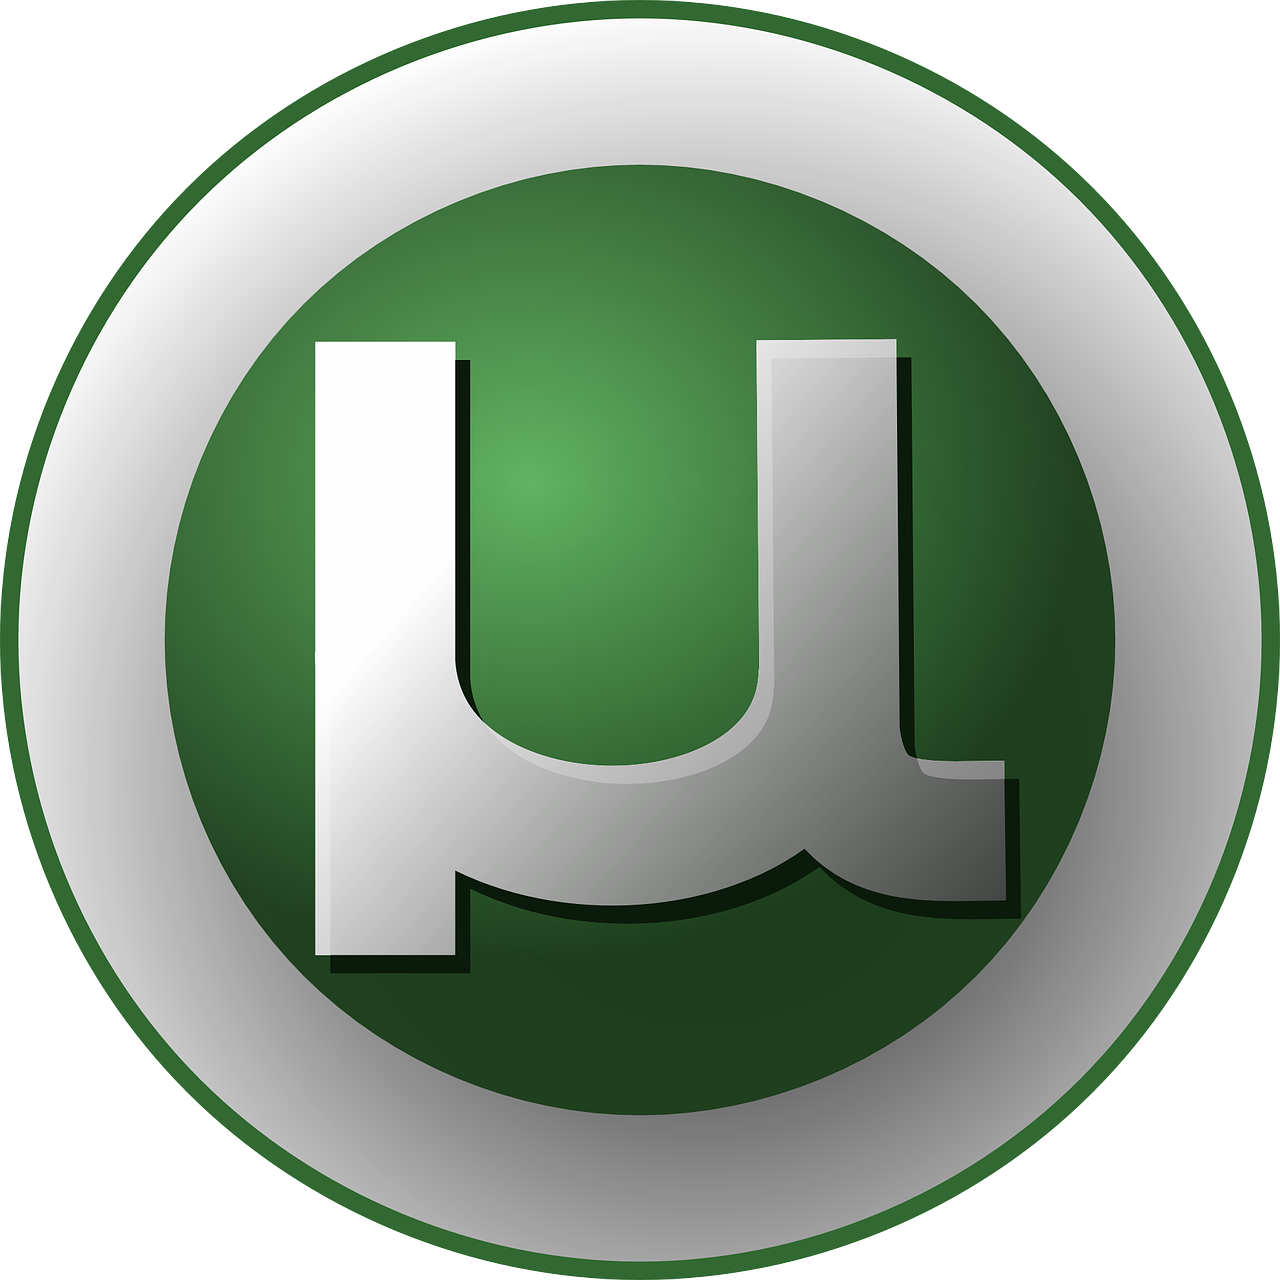 Www utorrent com intl. Значок торрента. Utorrent. Иконка utorrent.